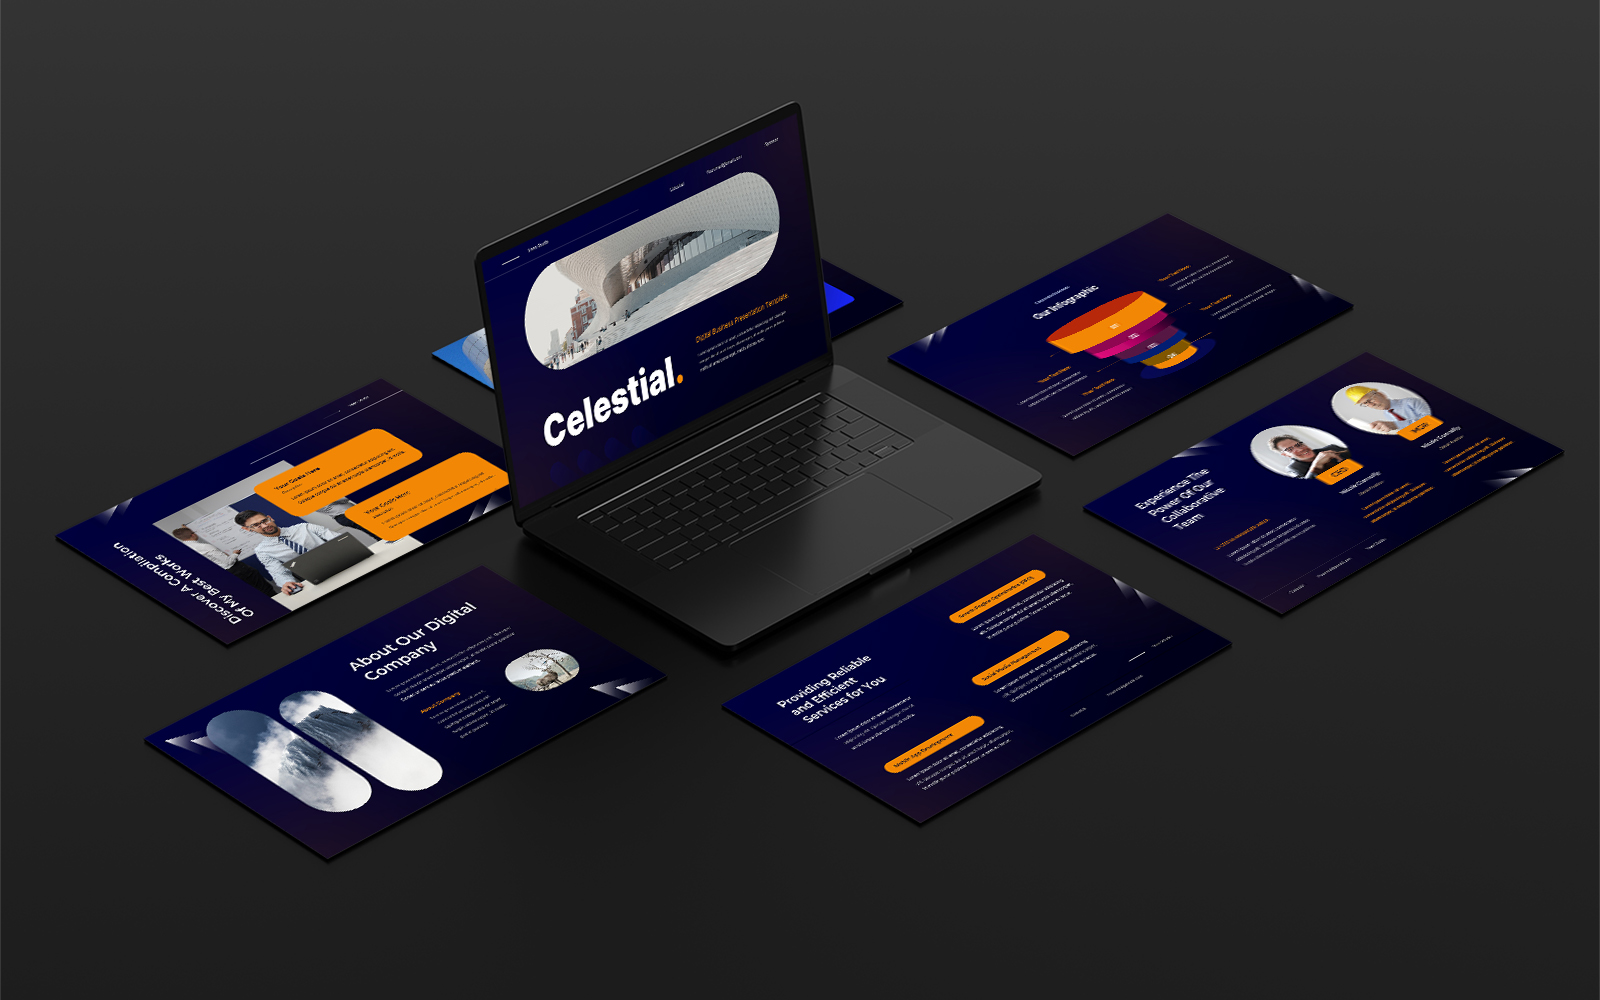 Celestial - Digital Business PowerPoint Template